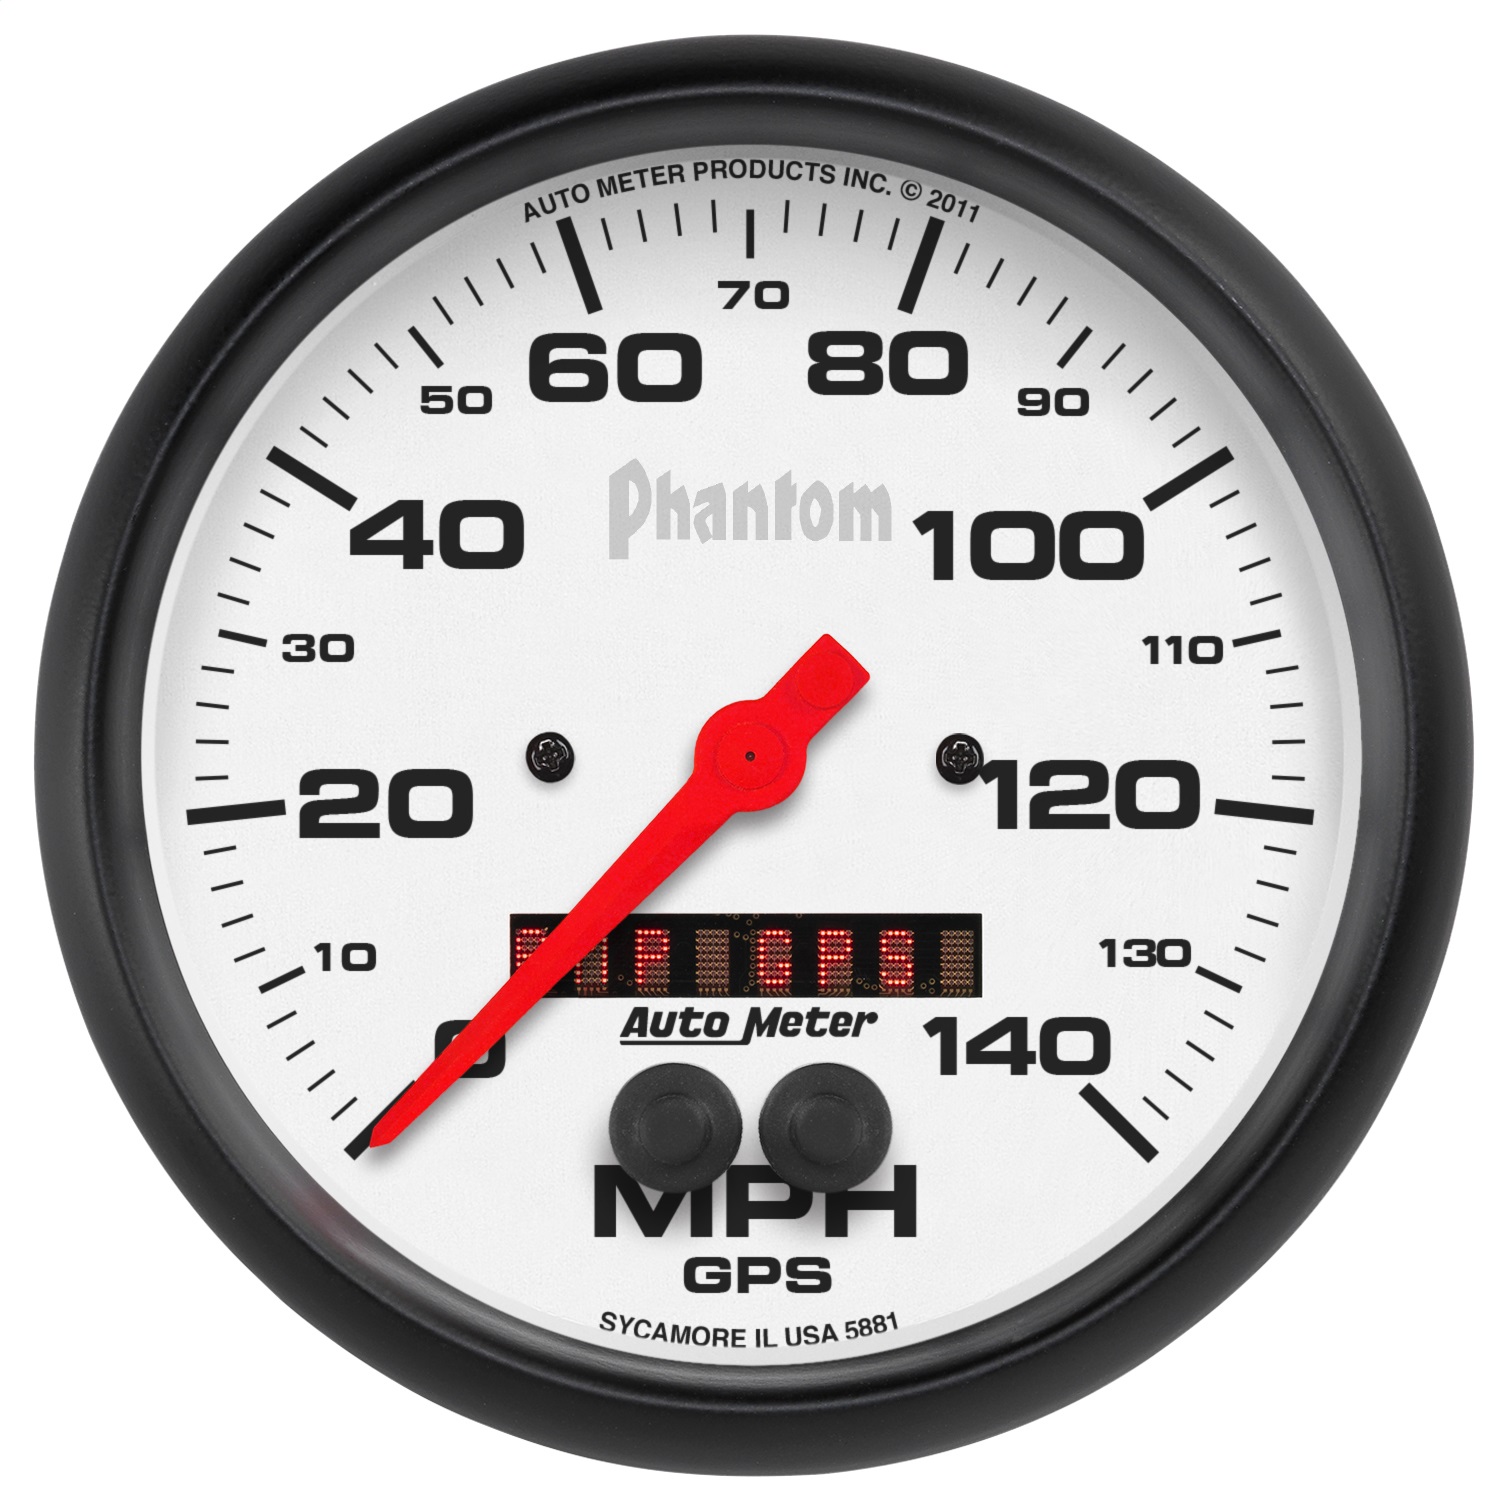 Auto Meter Auto Meter 5881 Phantom; GPS Speedometer